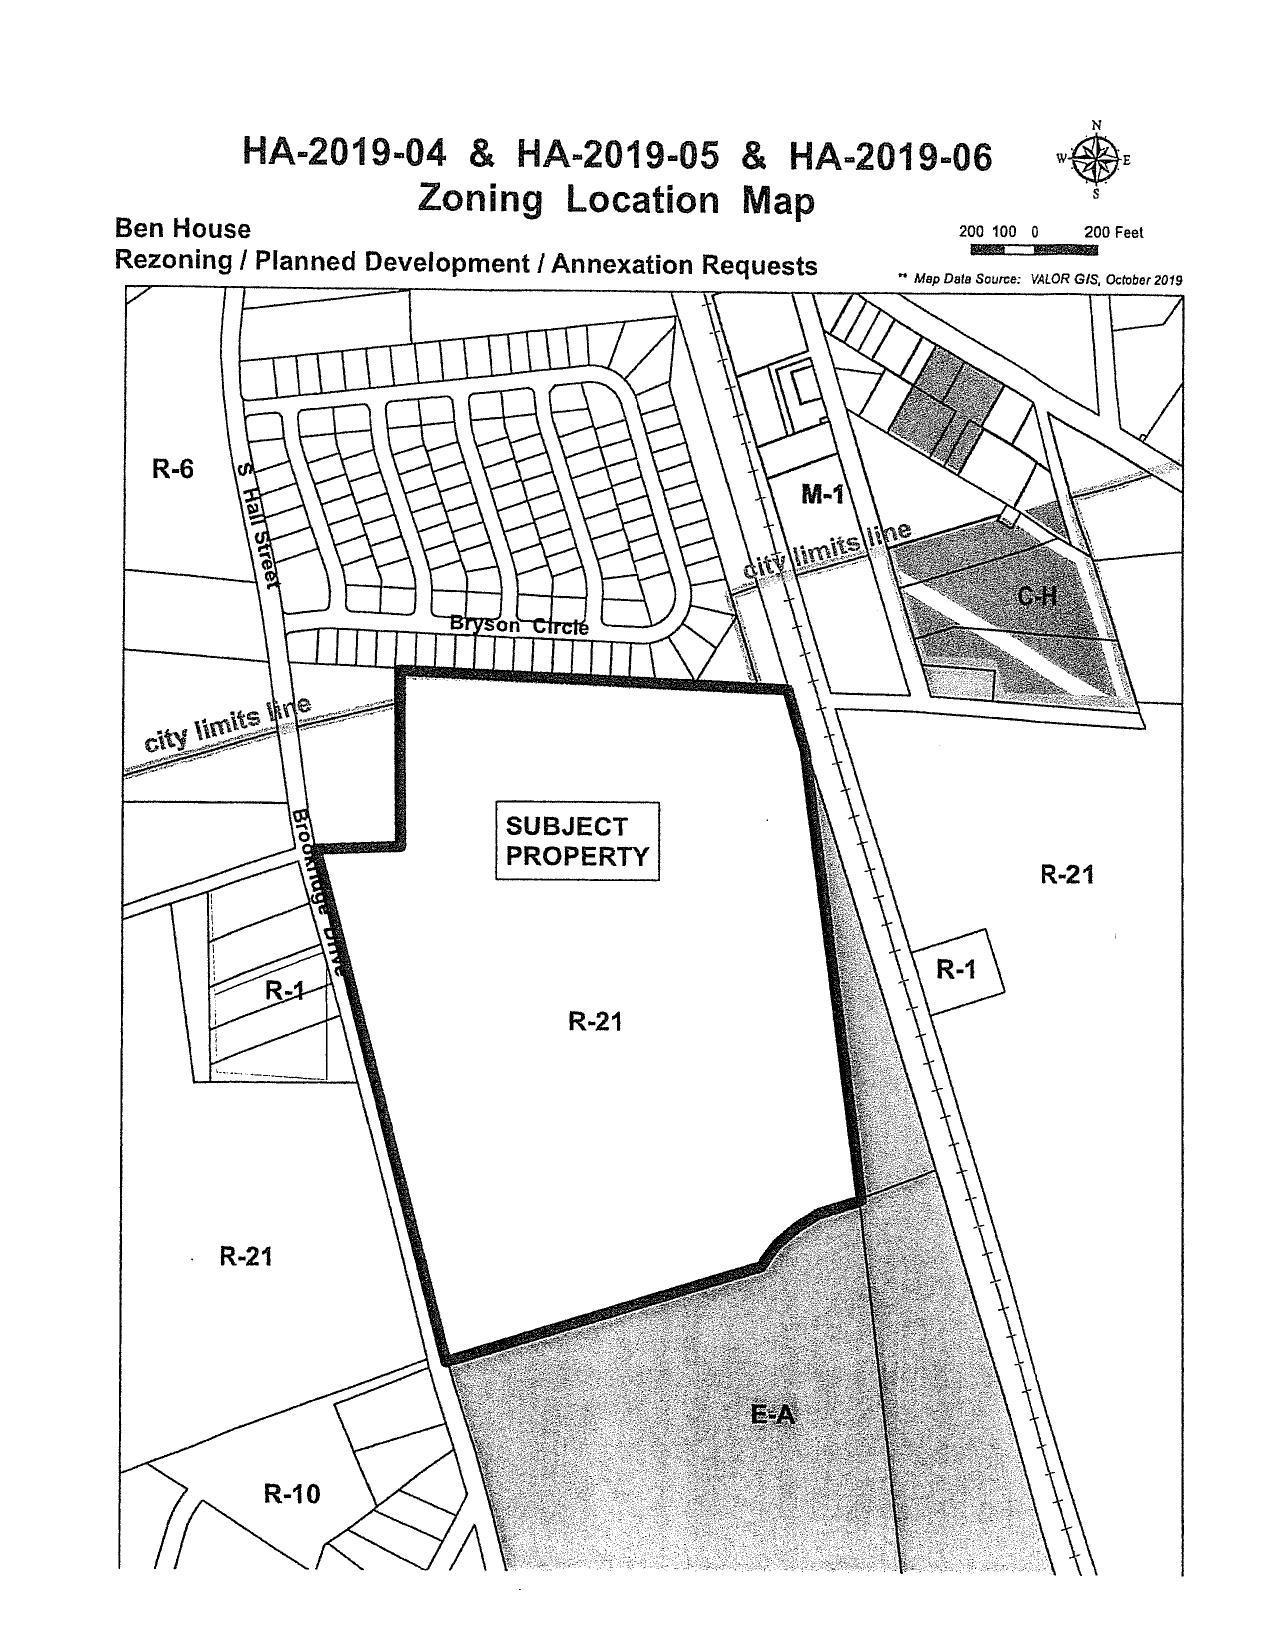 Zoning Location Map